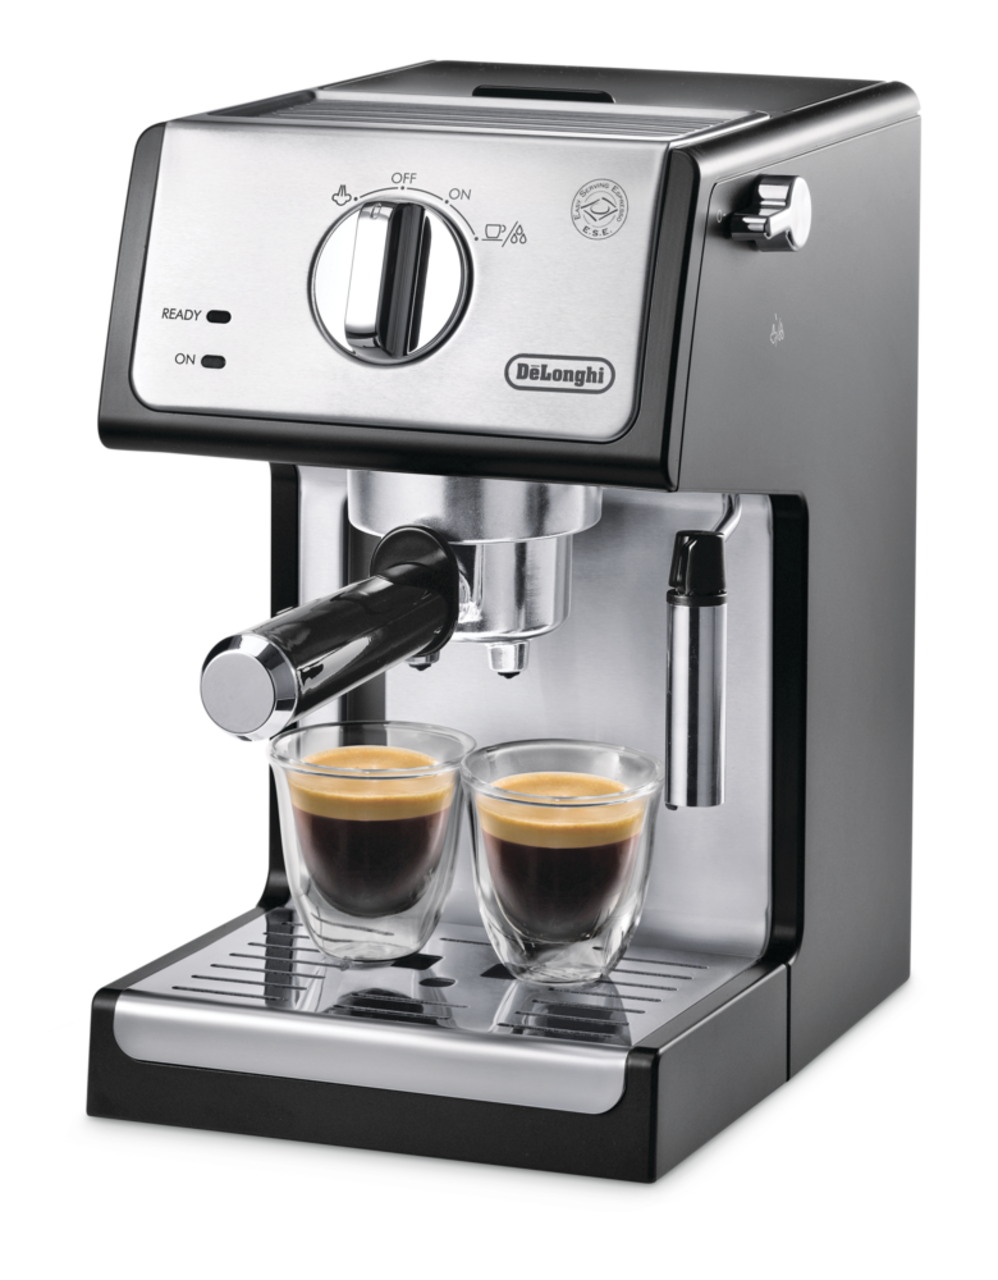 DELONGHI Machine à café expresso Cappuccino 15 Bar café moulu et